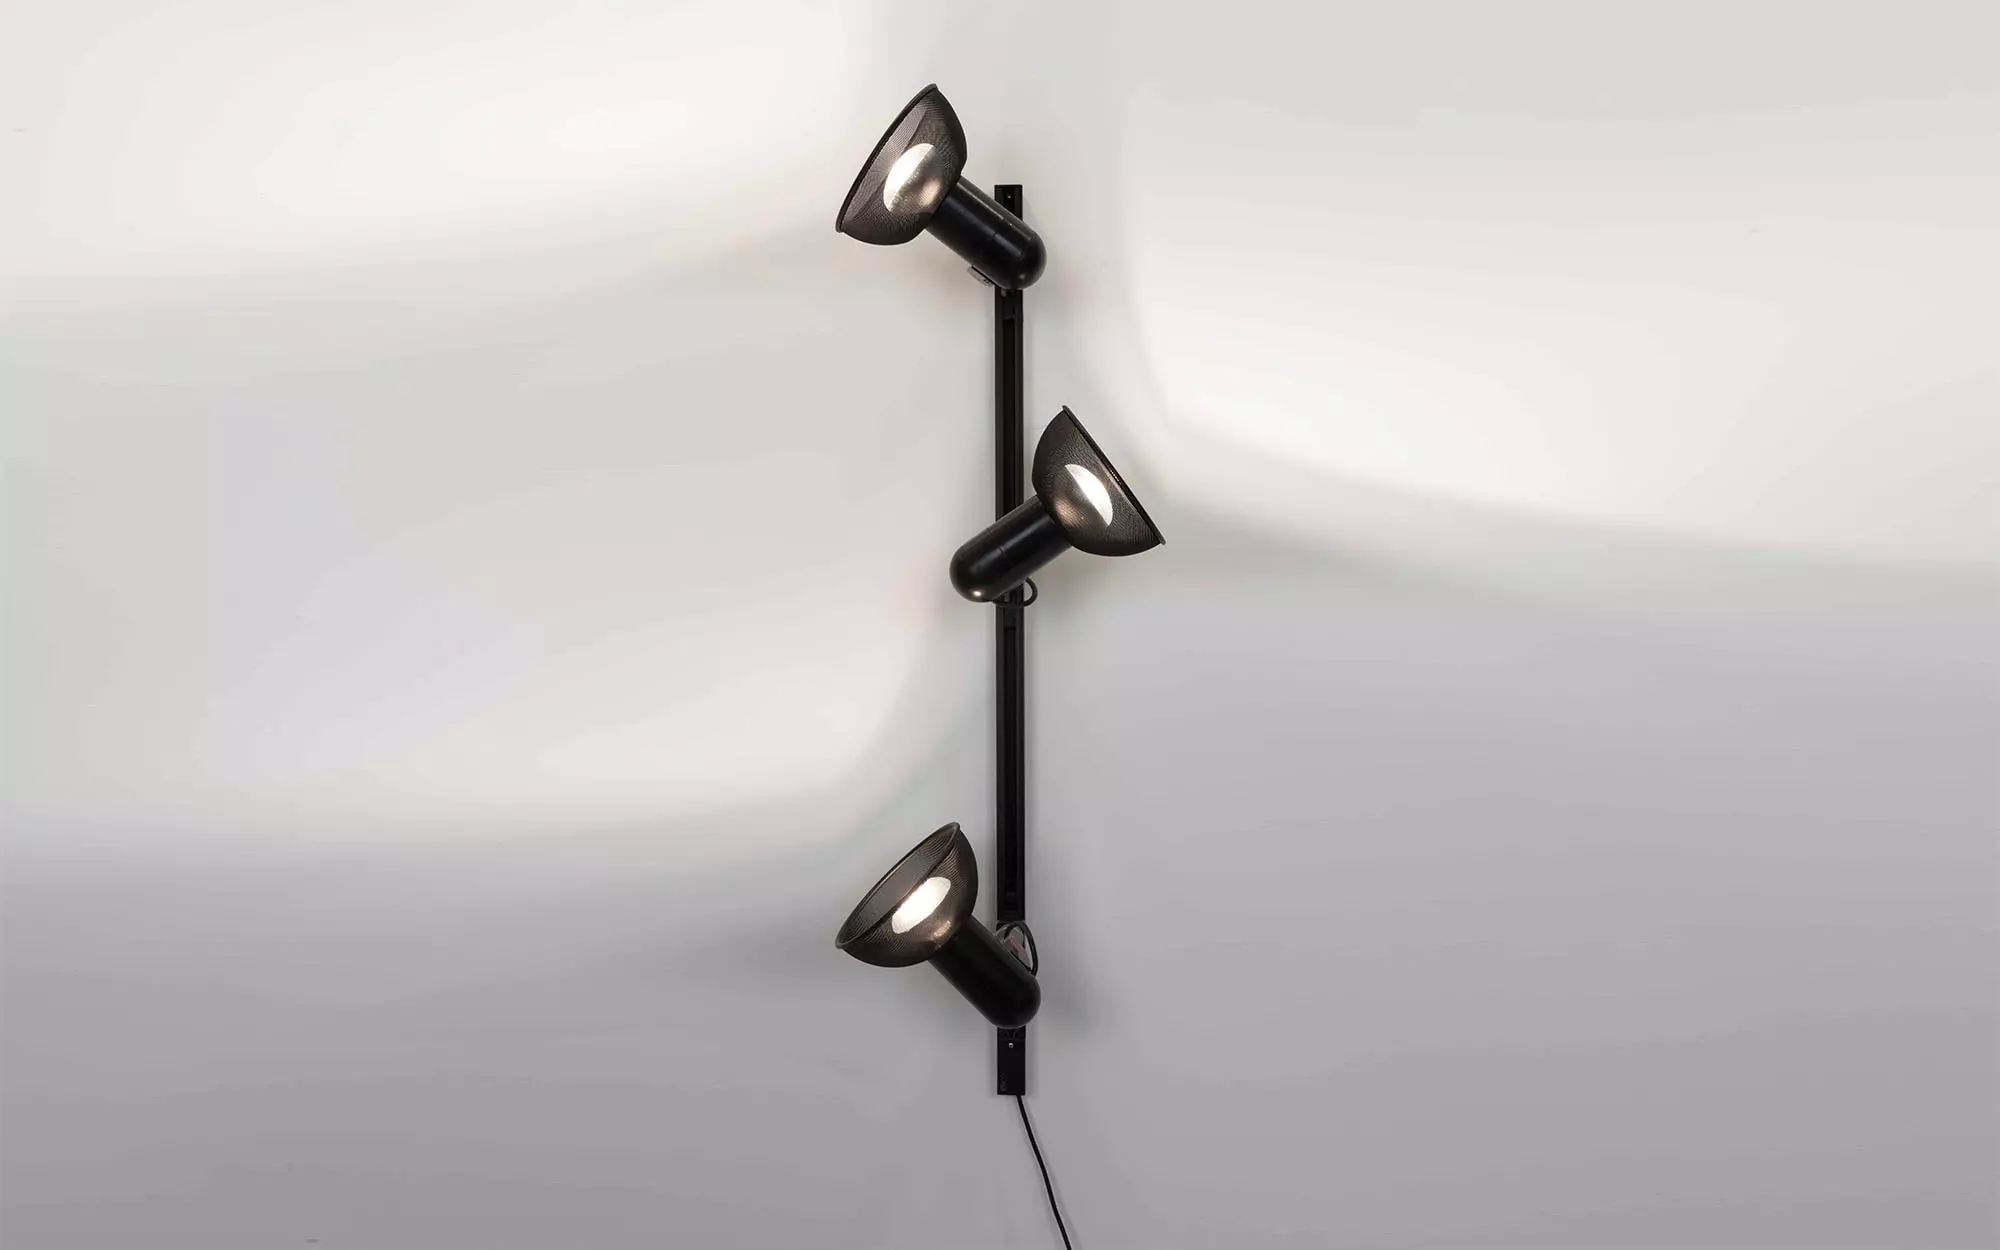 Spot - Roger Tallon - wall-light - Galerie kreo